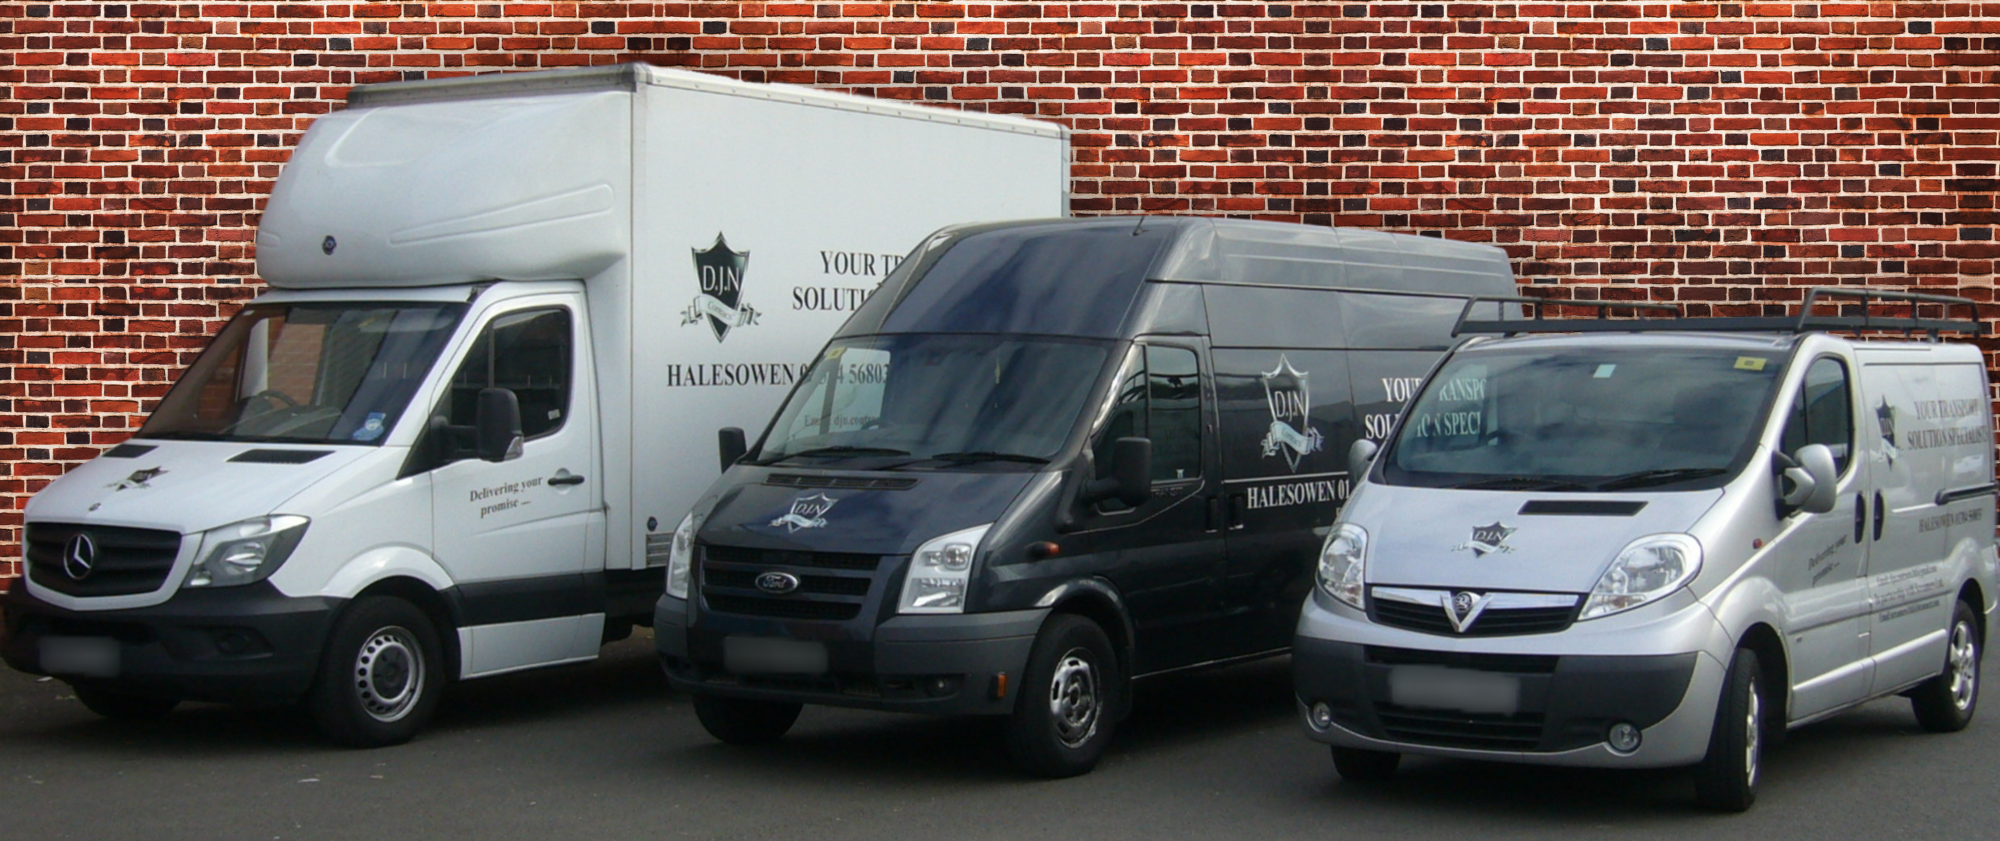 DJN Contracts delivery vans